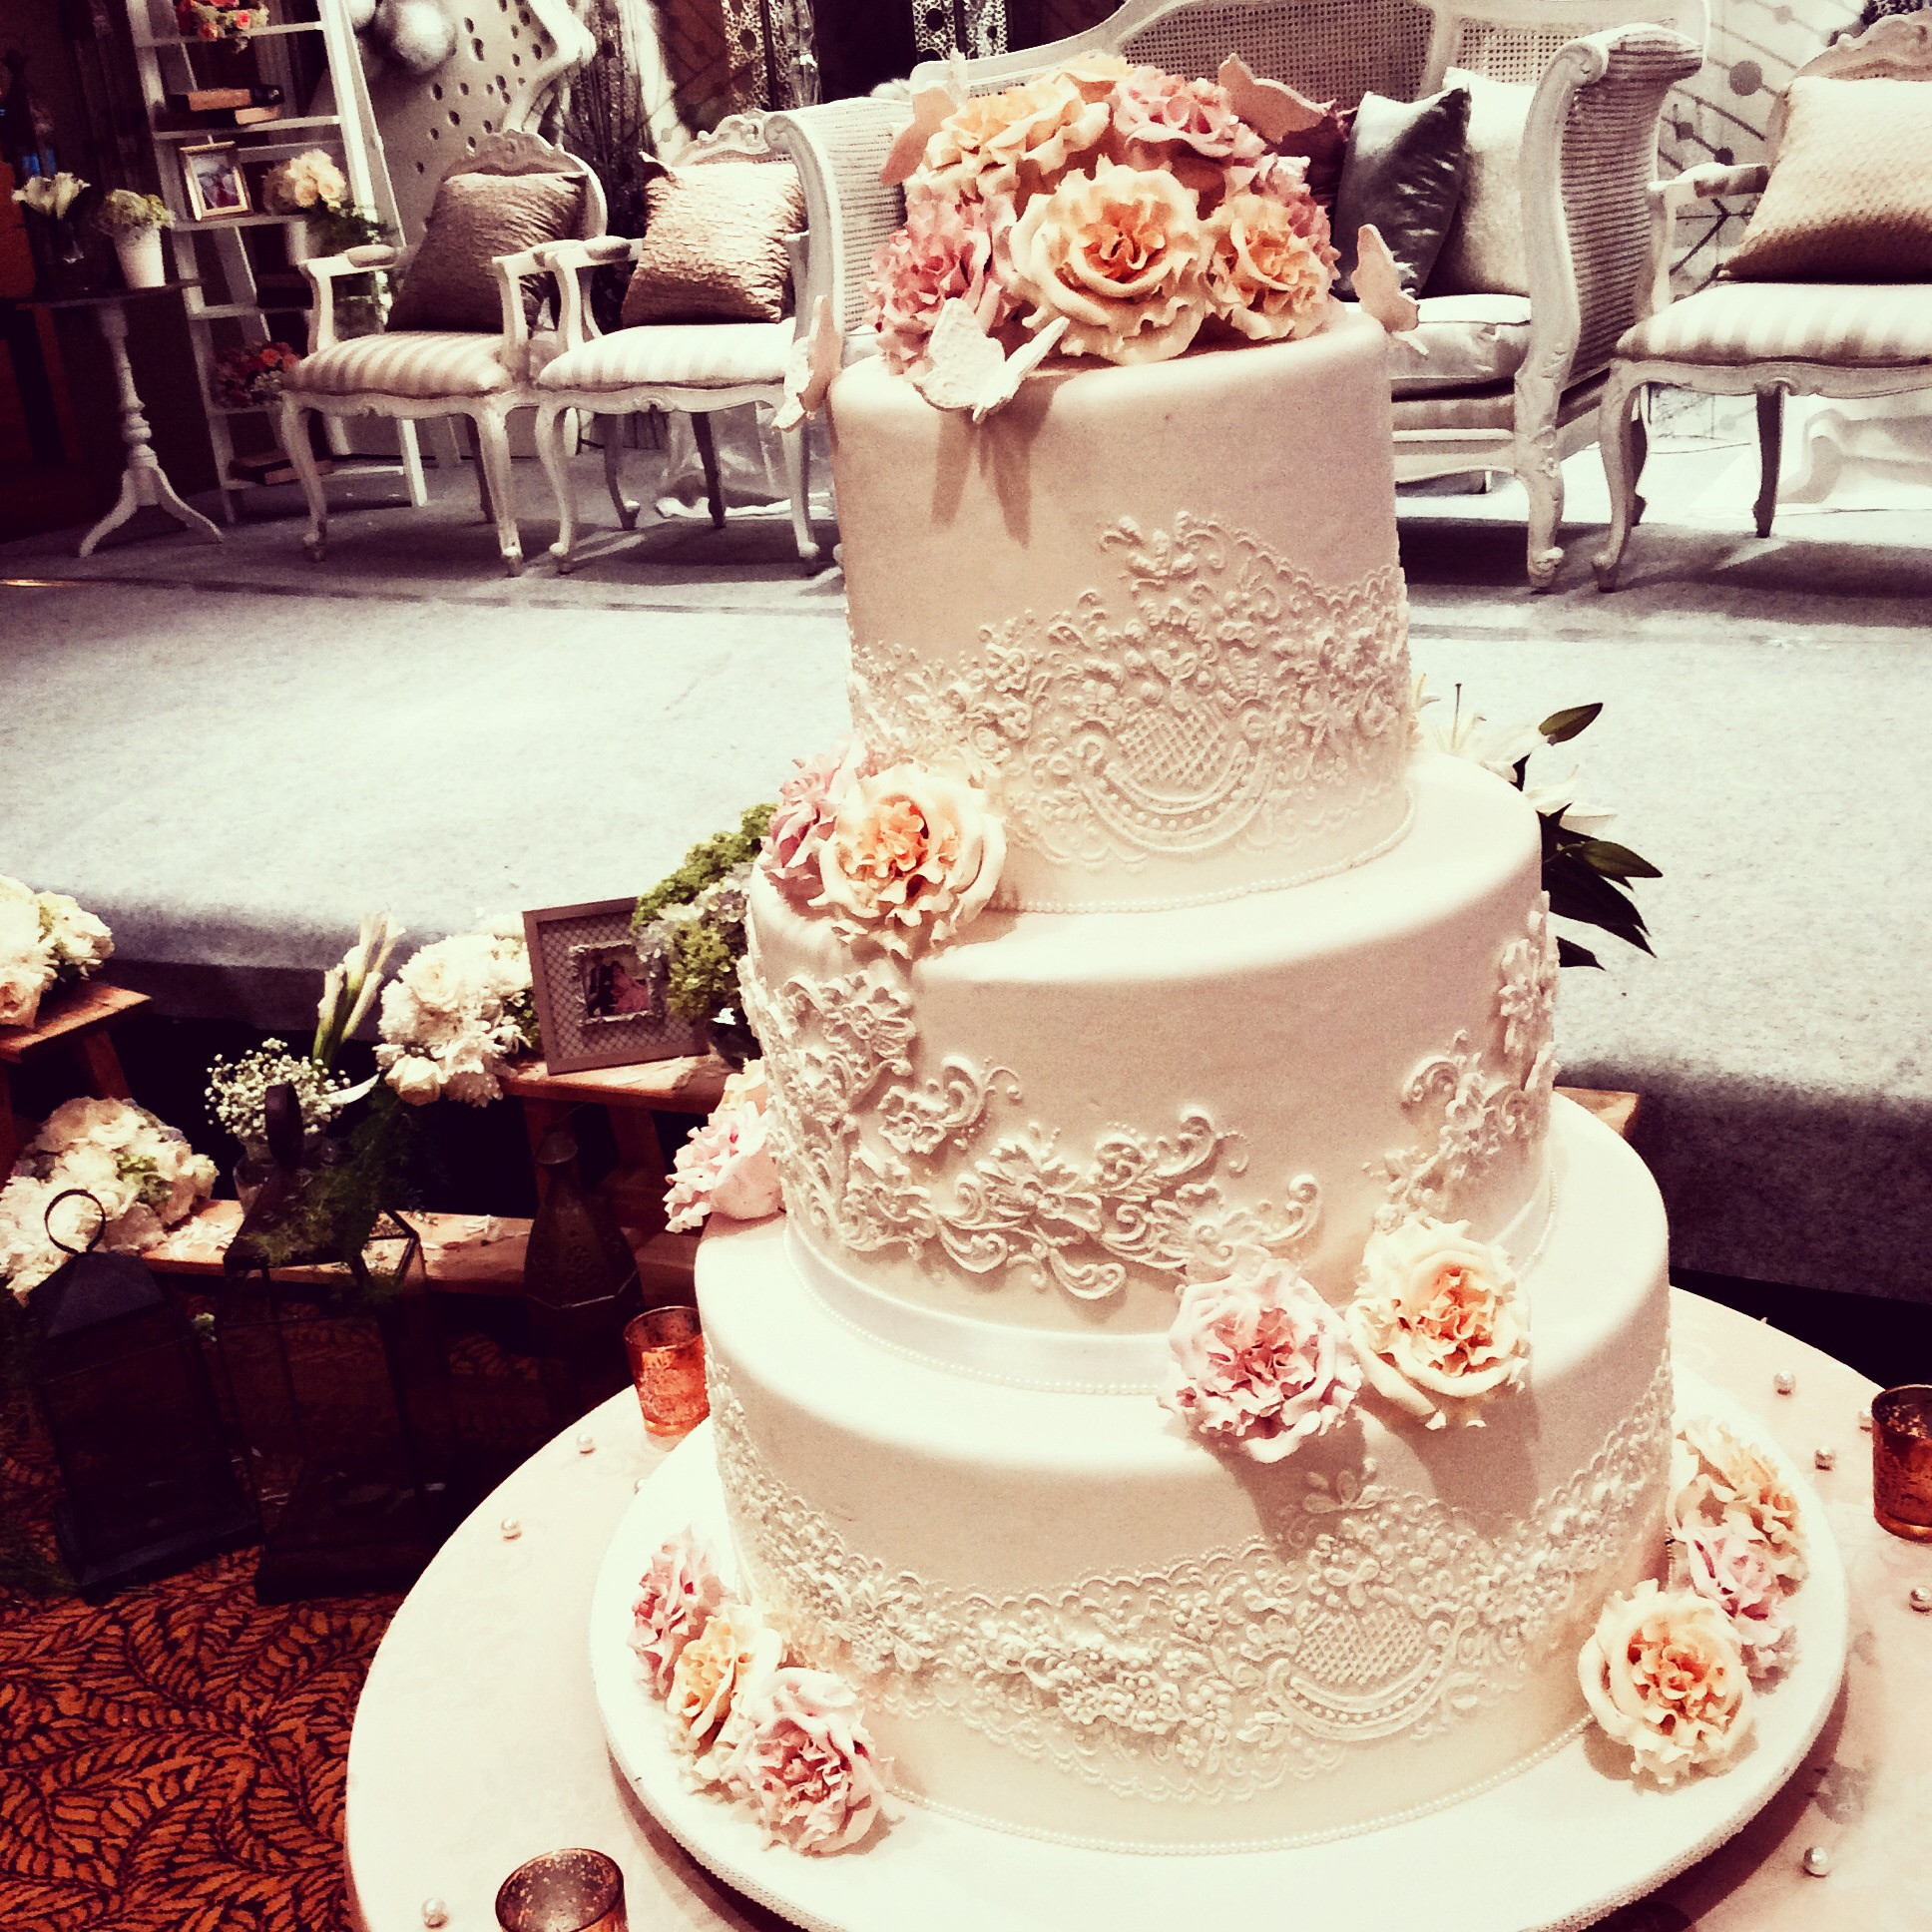 3 Layers Wedding Cakes
 3 layers wedding cakes by LeNovelle Cake